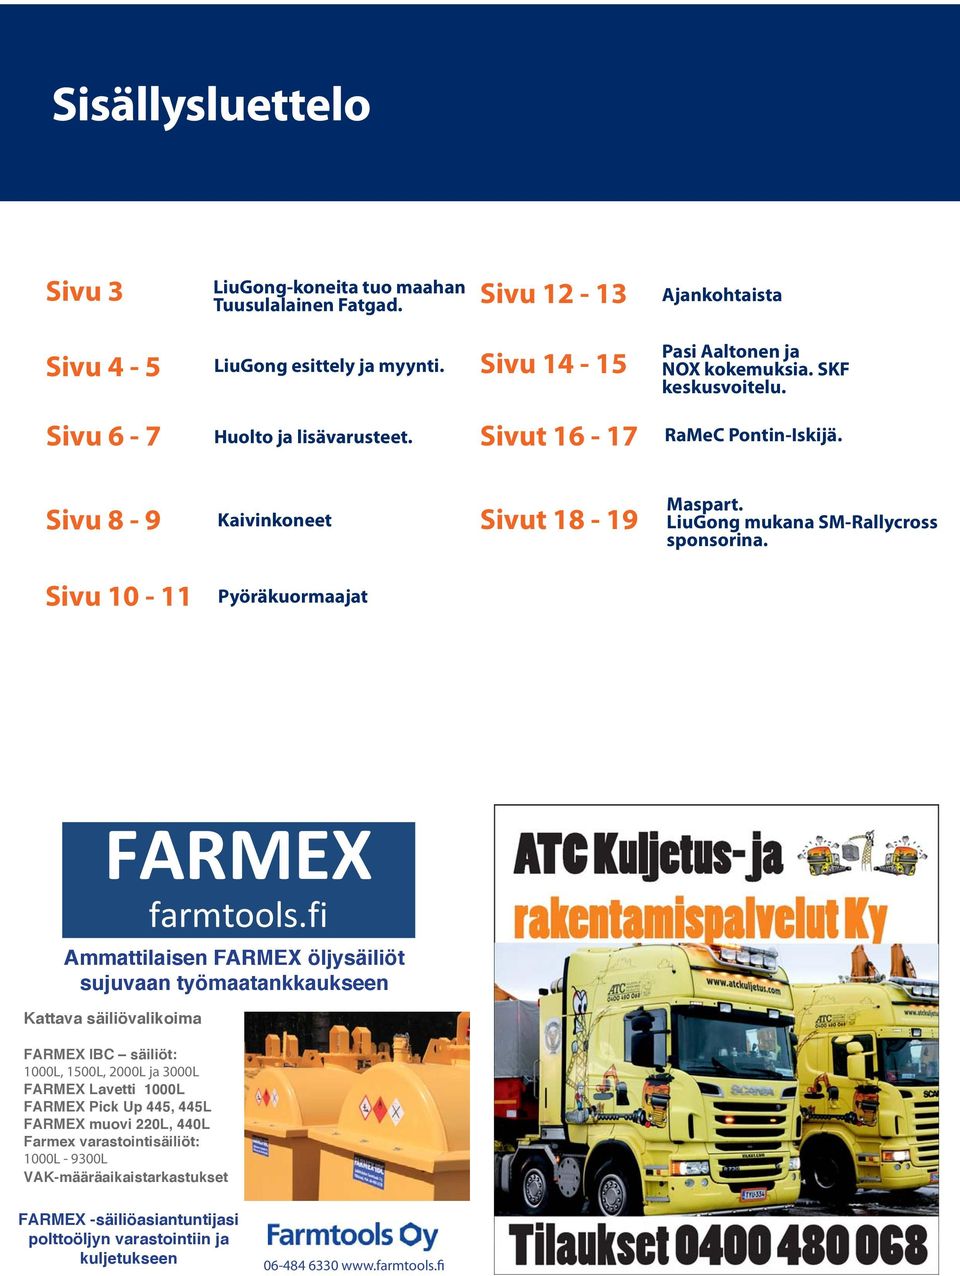 Sivu 10-11 Pyöräkuormaajat FARMEX farmtools.